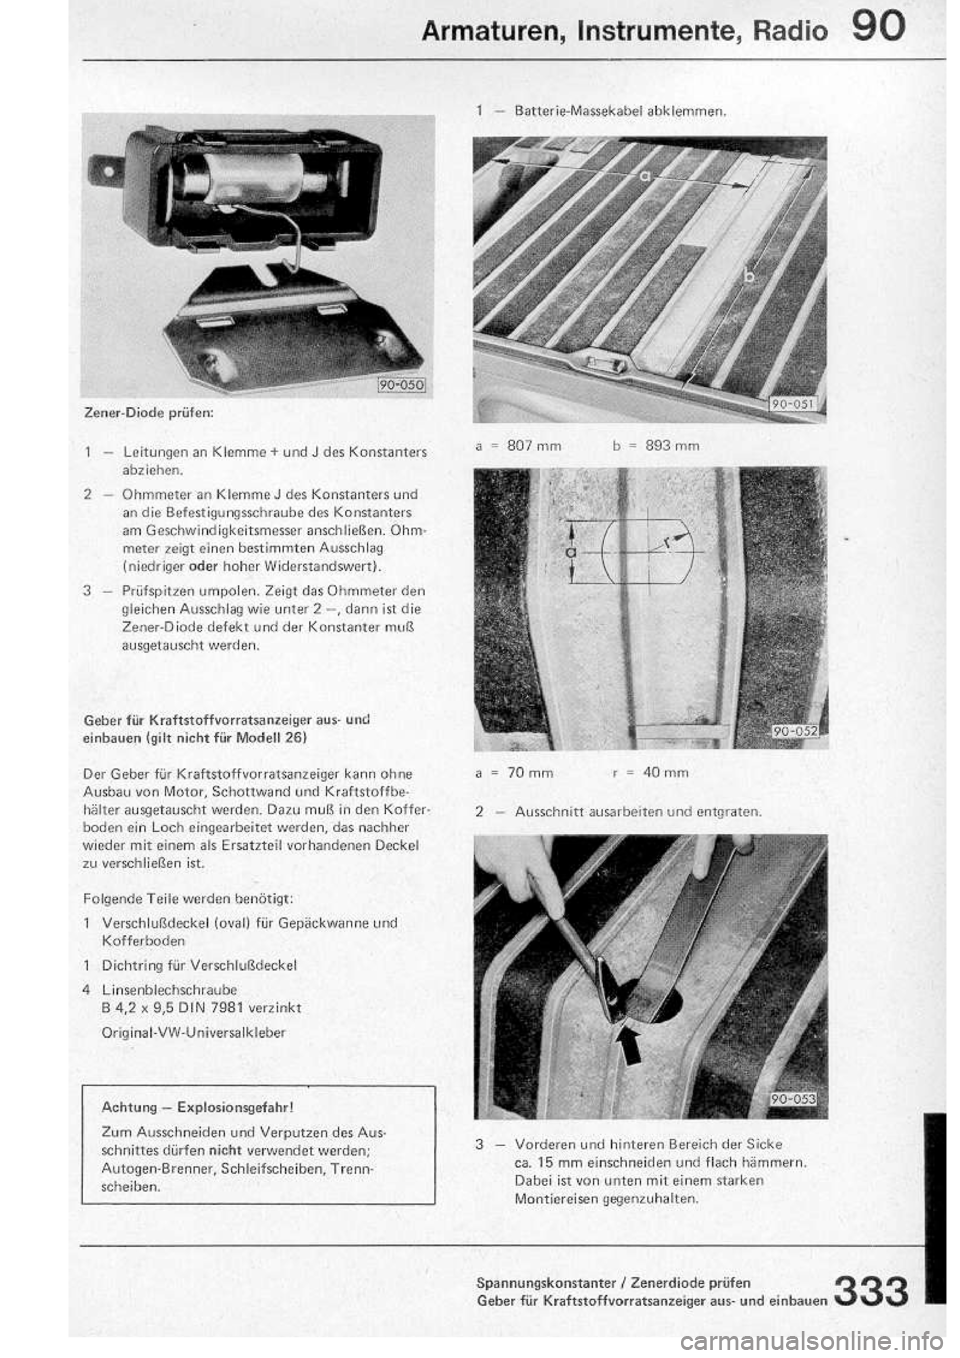 VOLKSWAGEN T2 1975  Repair Manual 
http://vwbus.dyndns.org/bulli/michaelk/vw_bus_d/rlf/10/333.jpg 